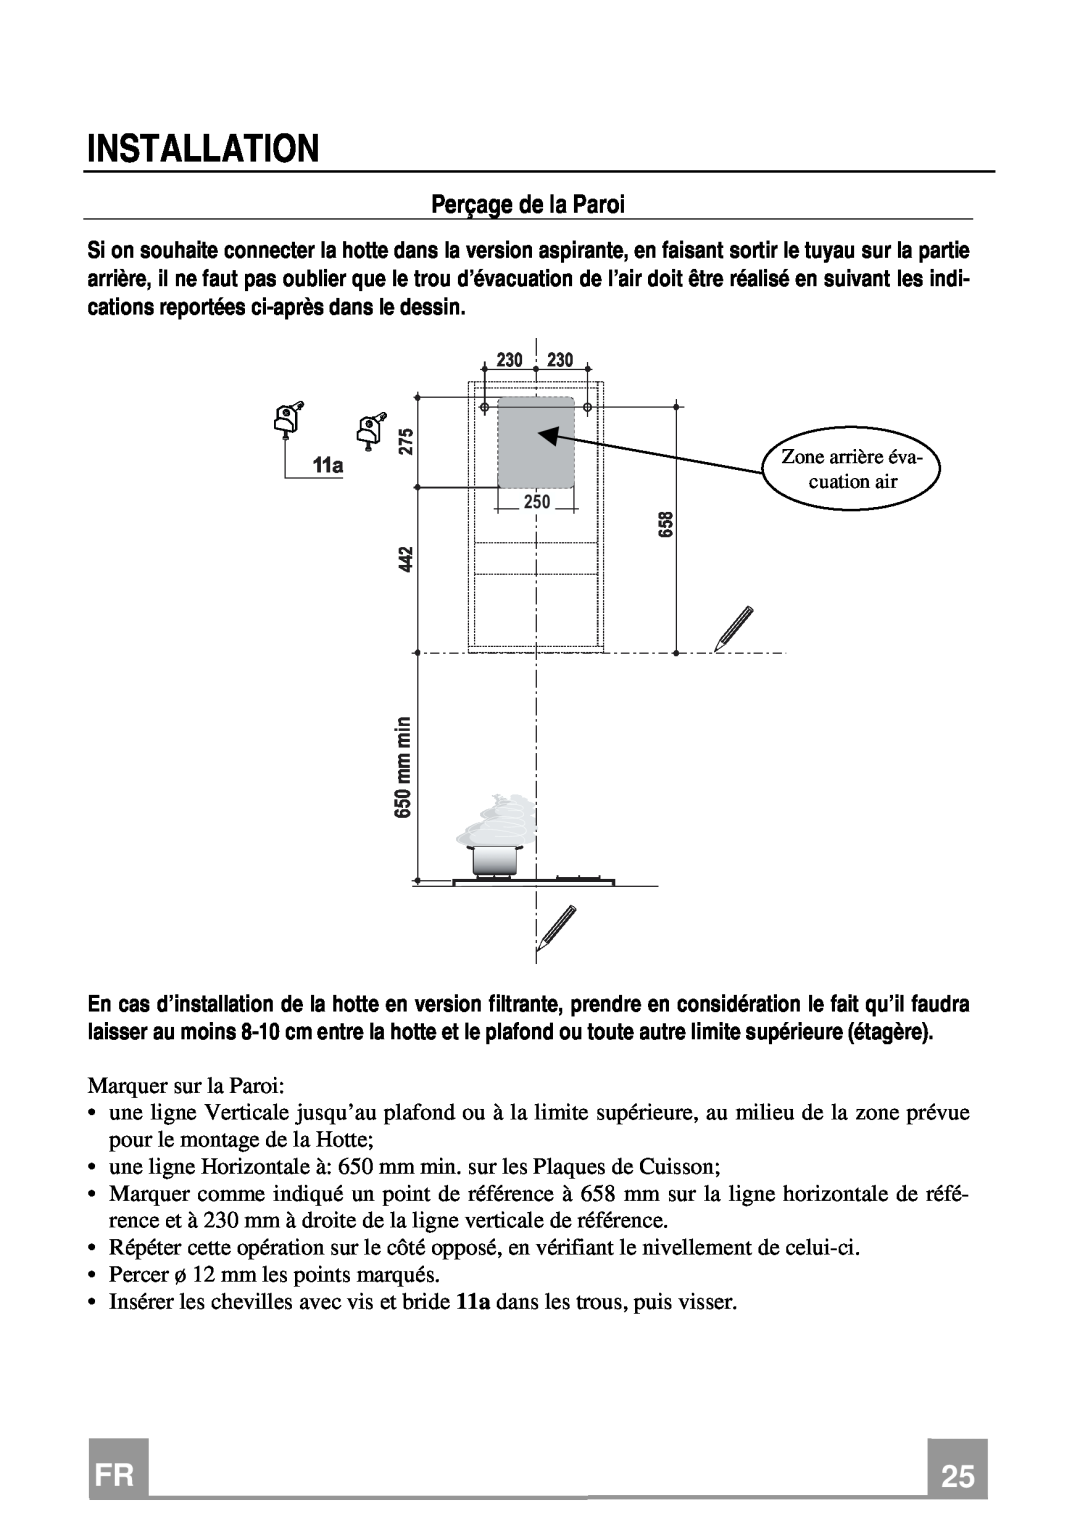 Franke Consumer Products FCR 708-H TC manual Perçage de la Paroi, Installation 